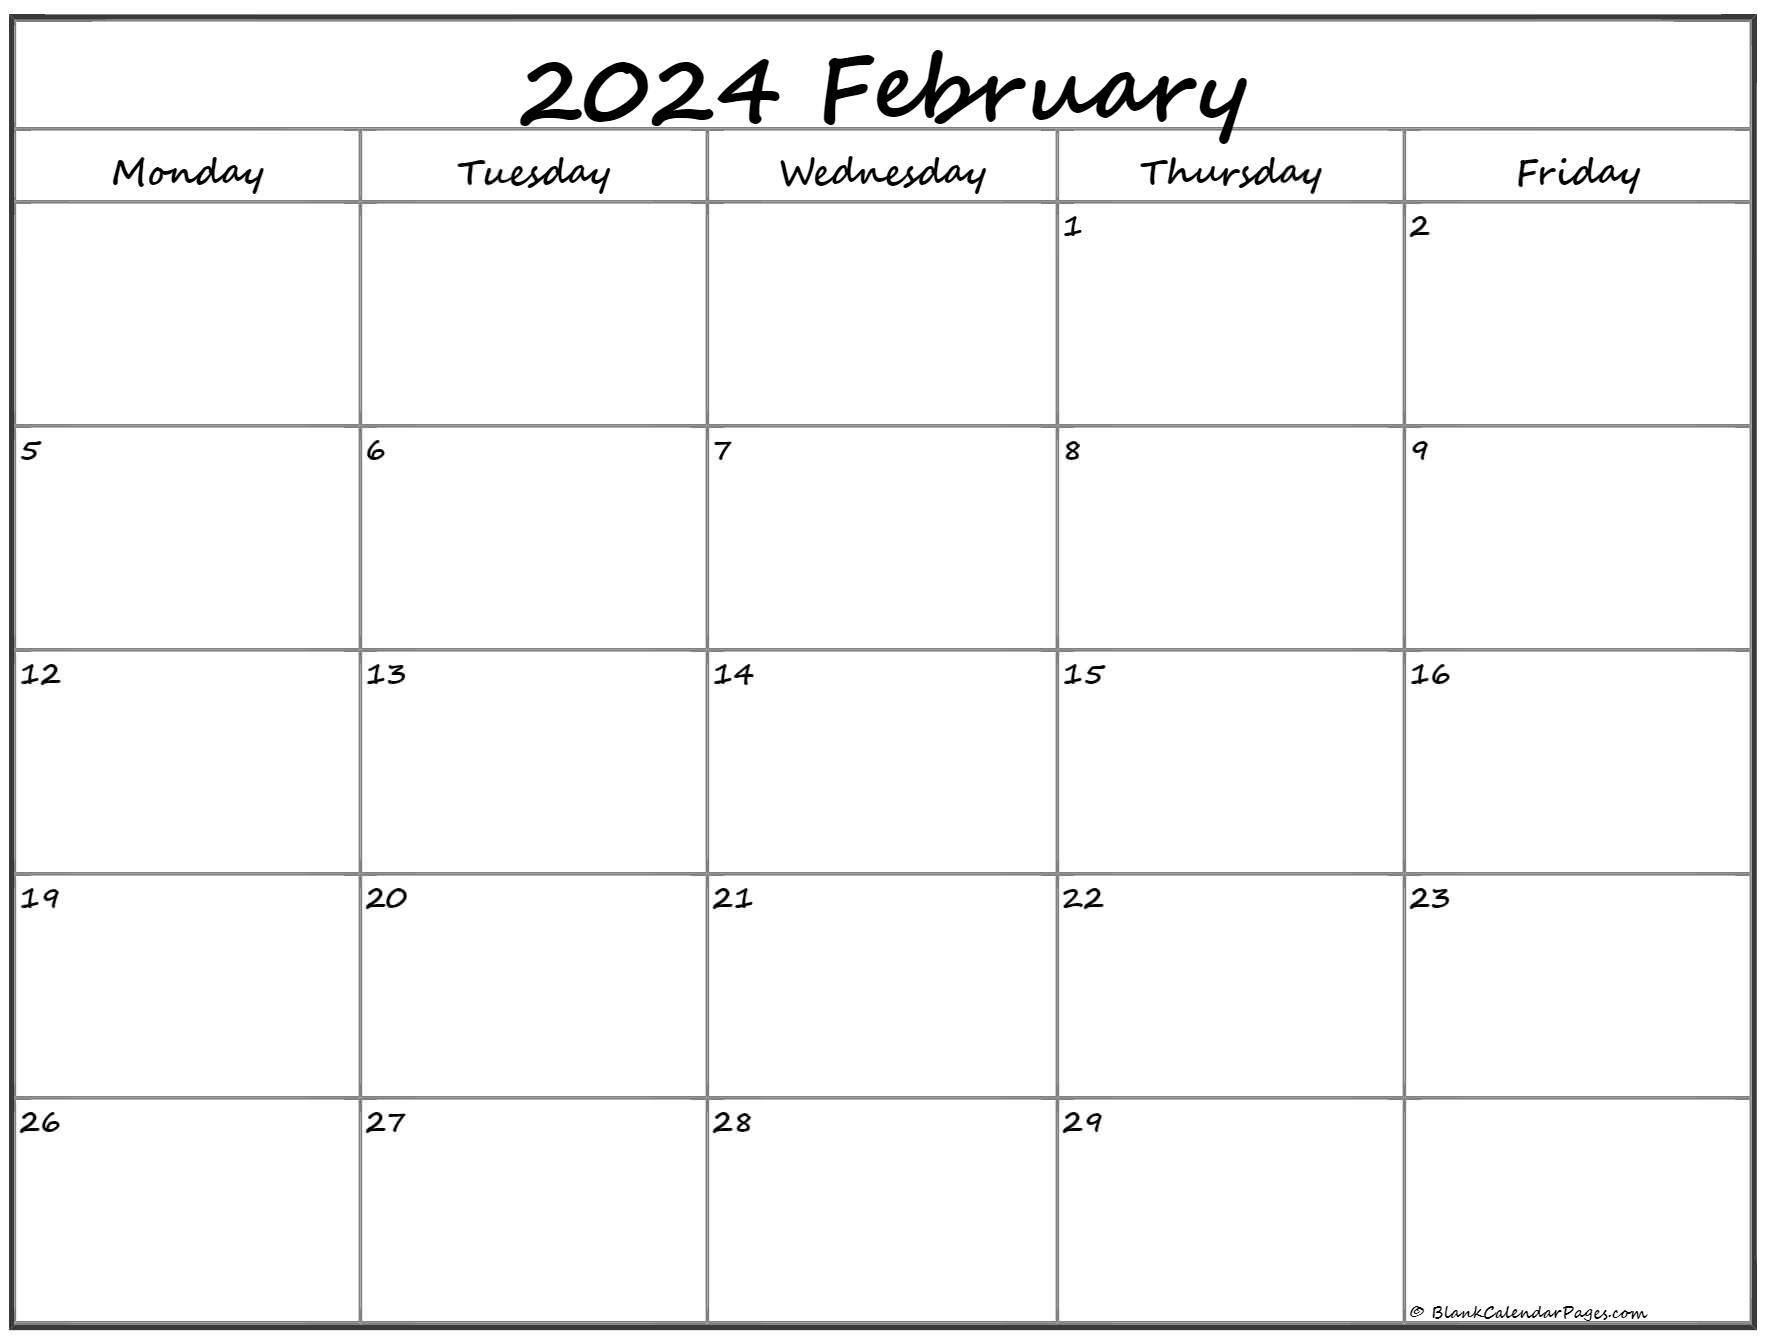 February 2020 Monday Calendar | Monday to Sunday